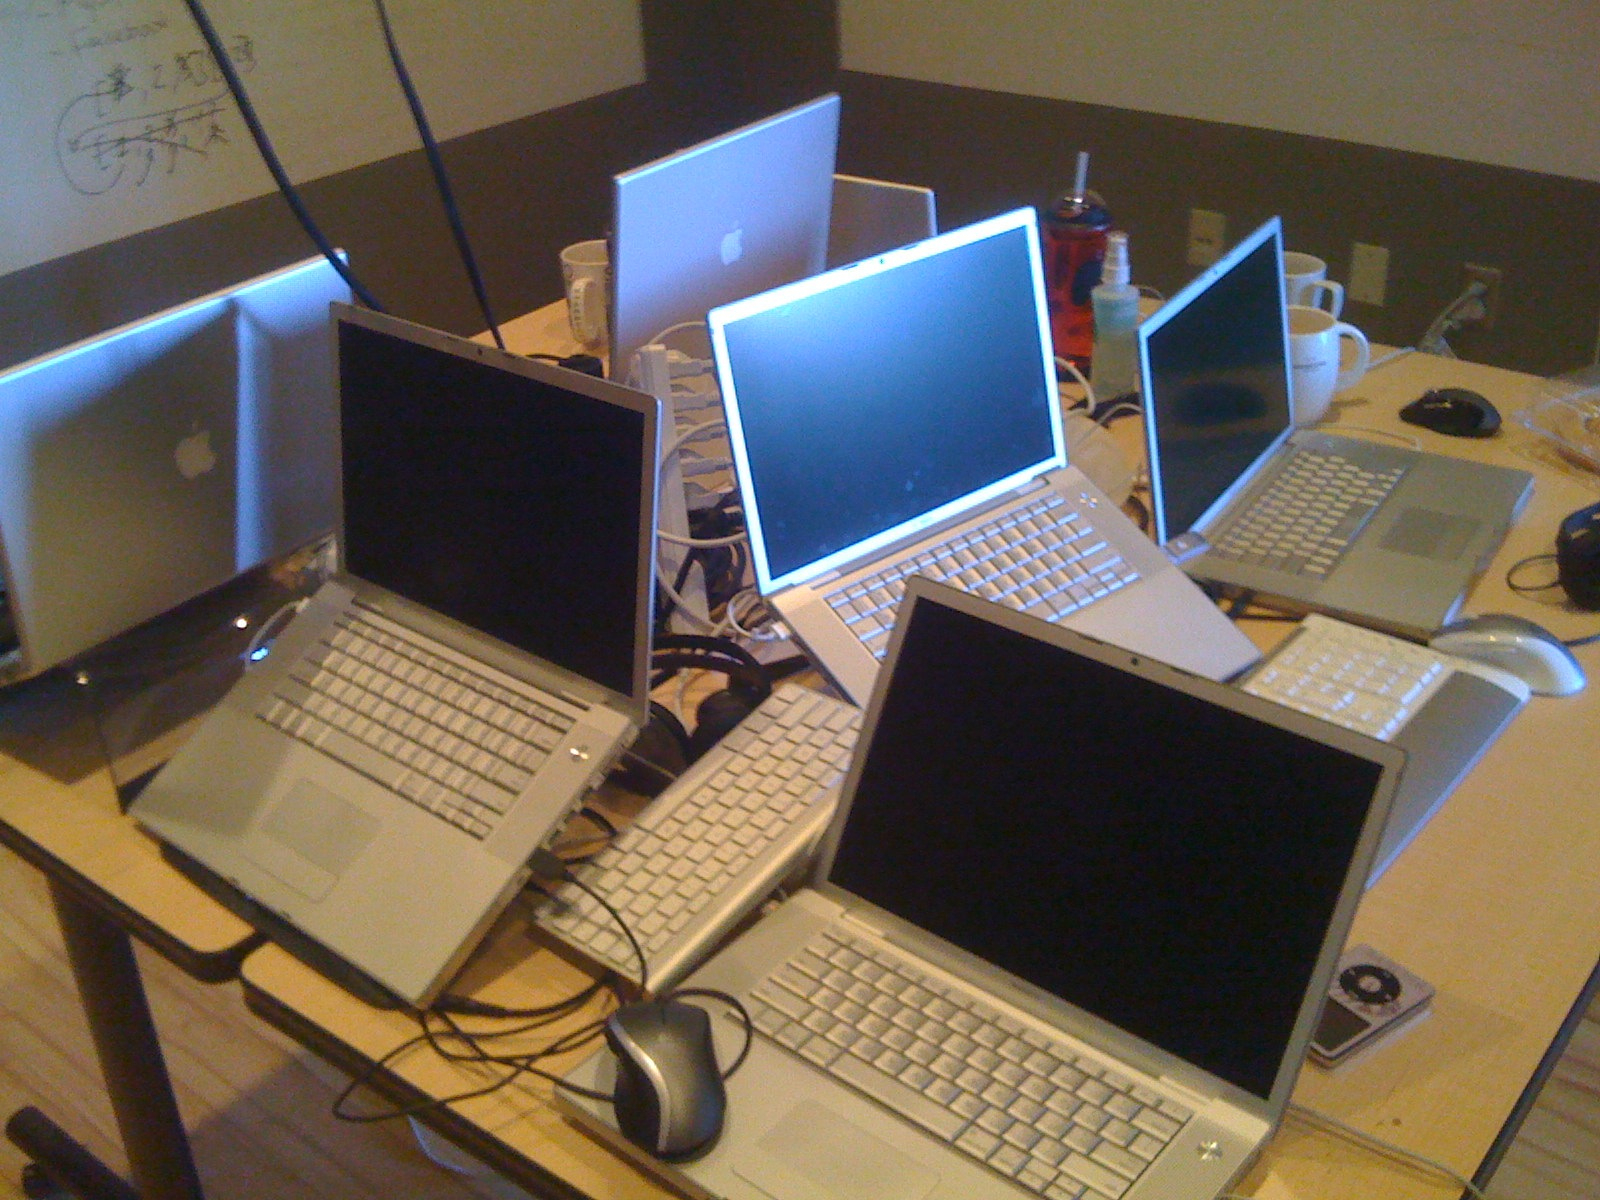 multiple laptops sit on top of a desk